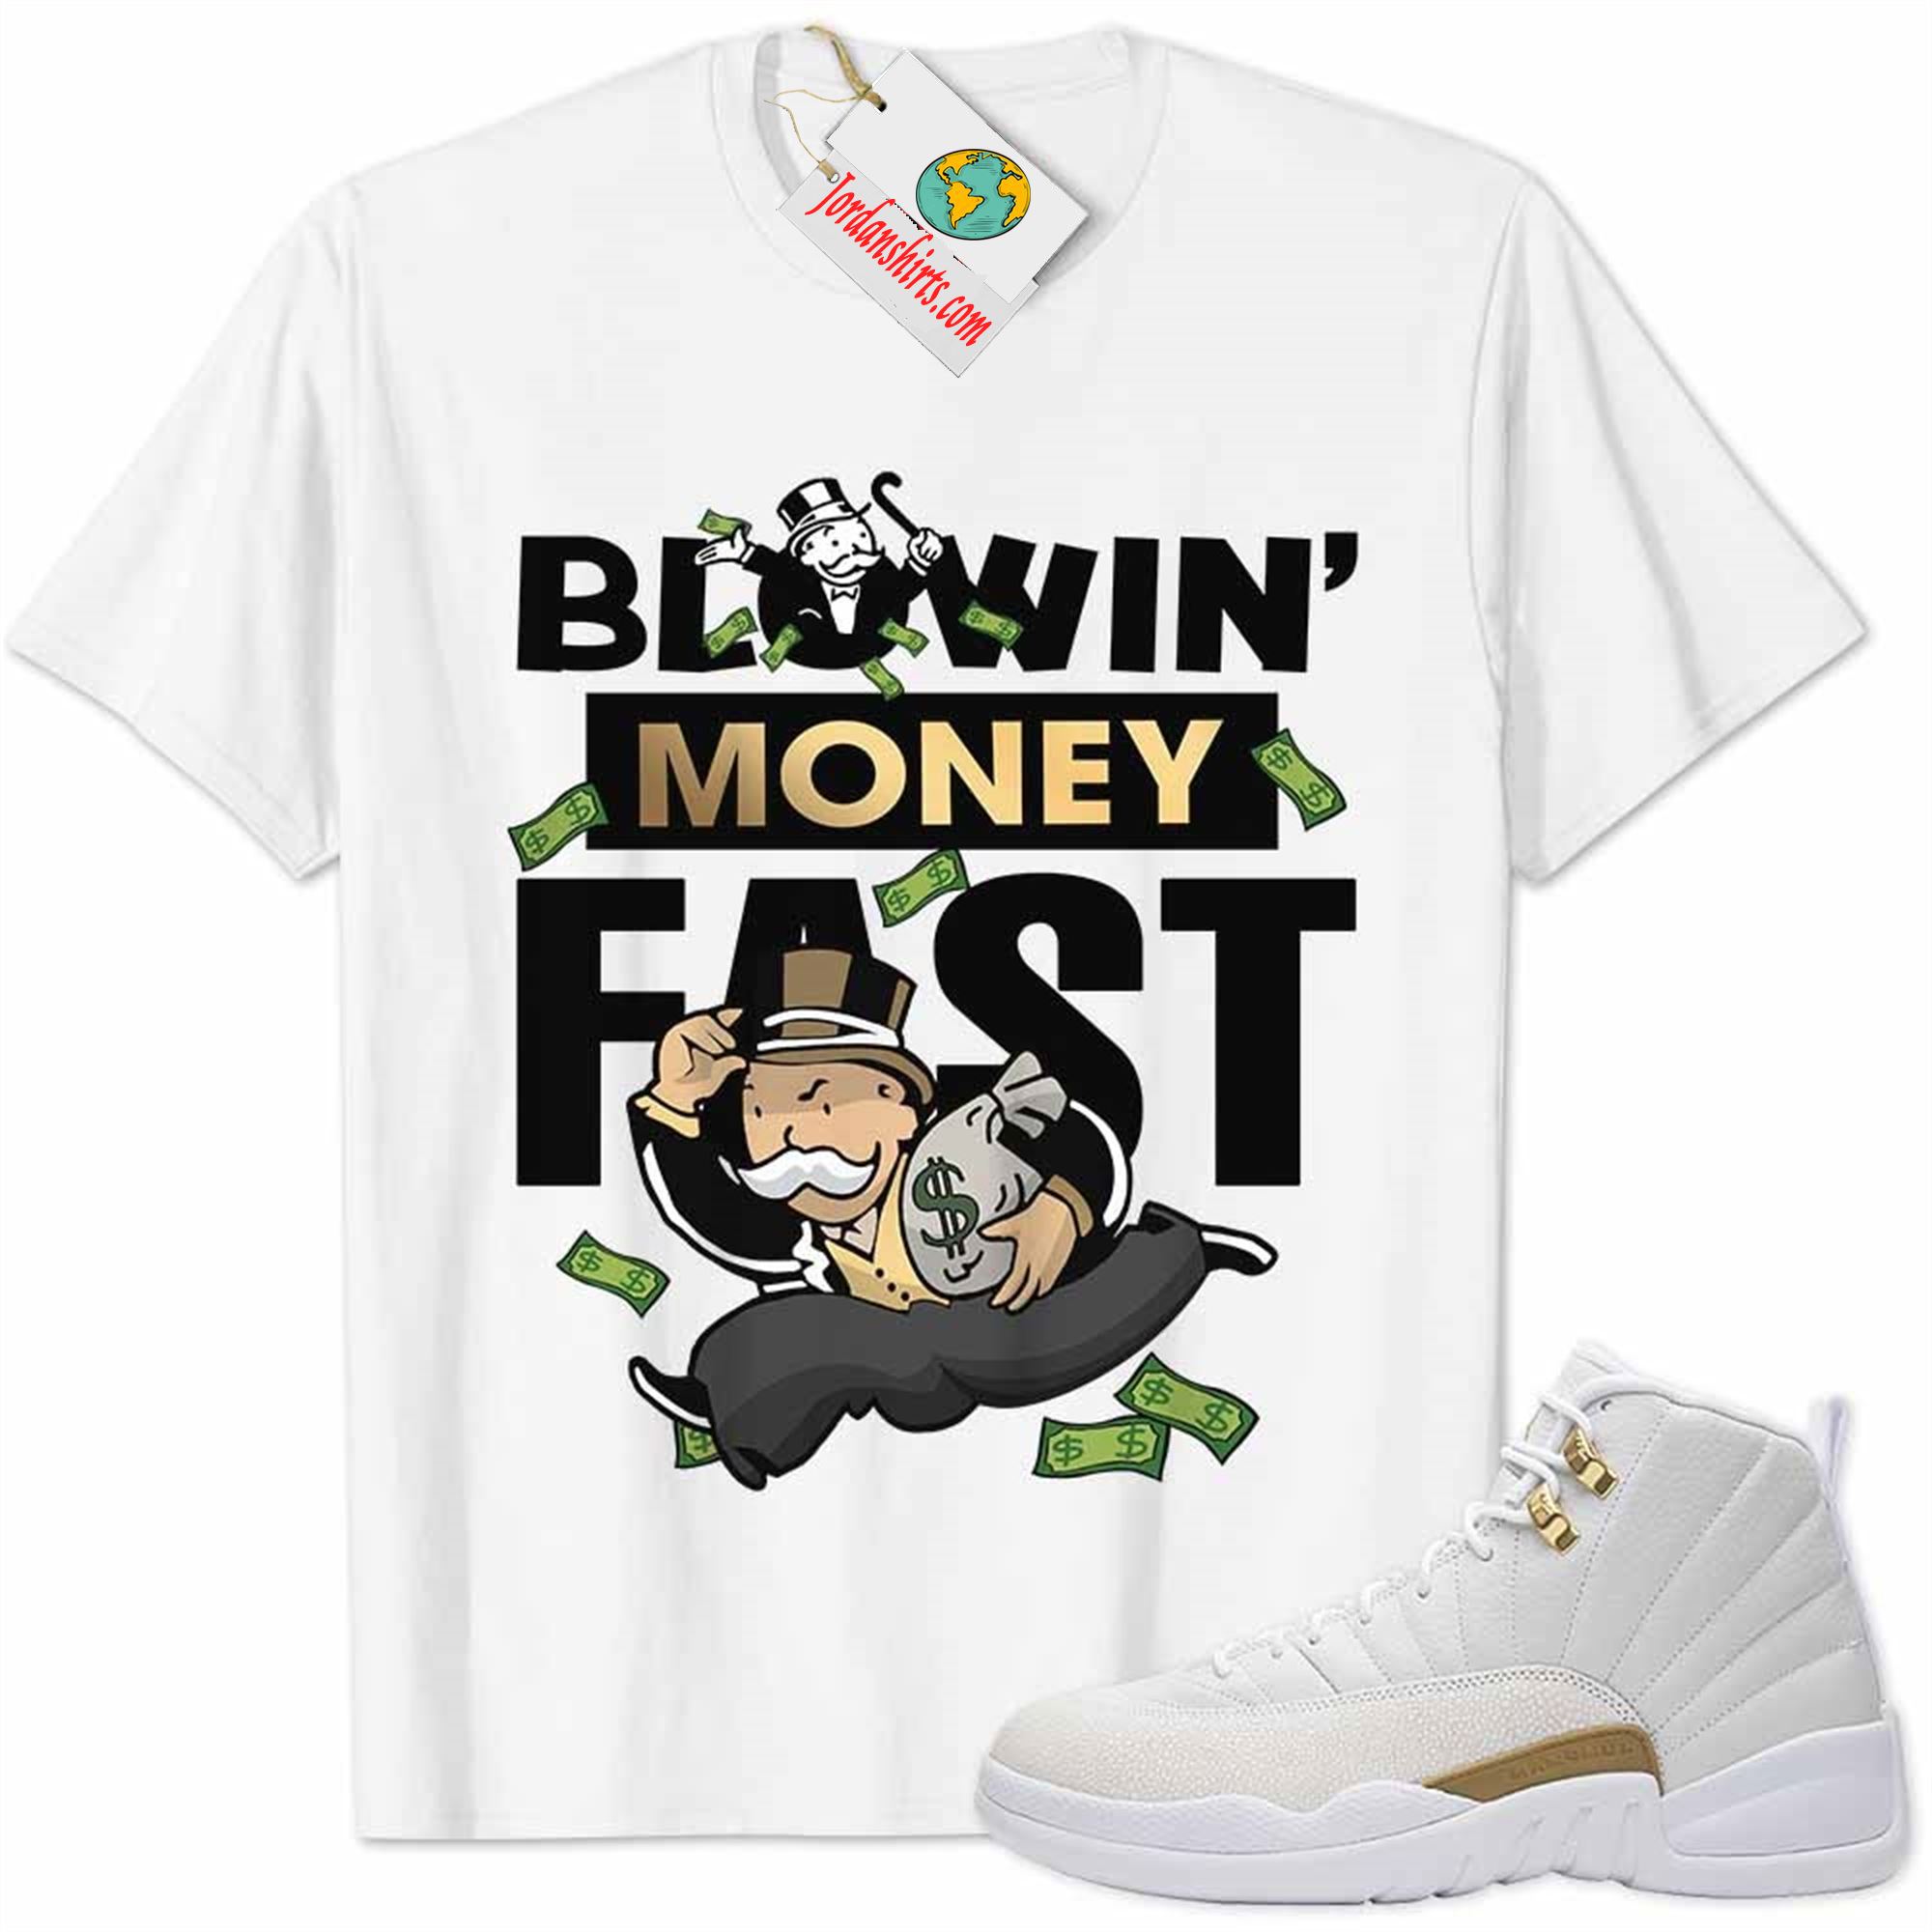 Jordan 12 Shirt, Ovo 12s Shirt Blowin Money Fast Mr Monopoly White Full Size Up To 5xl